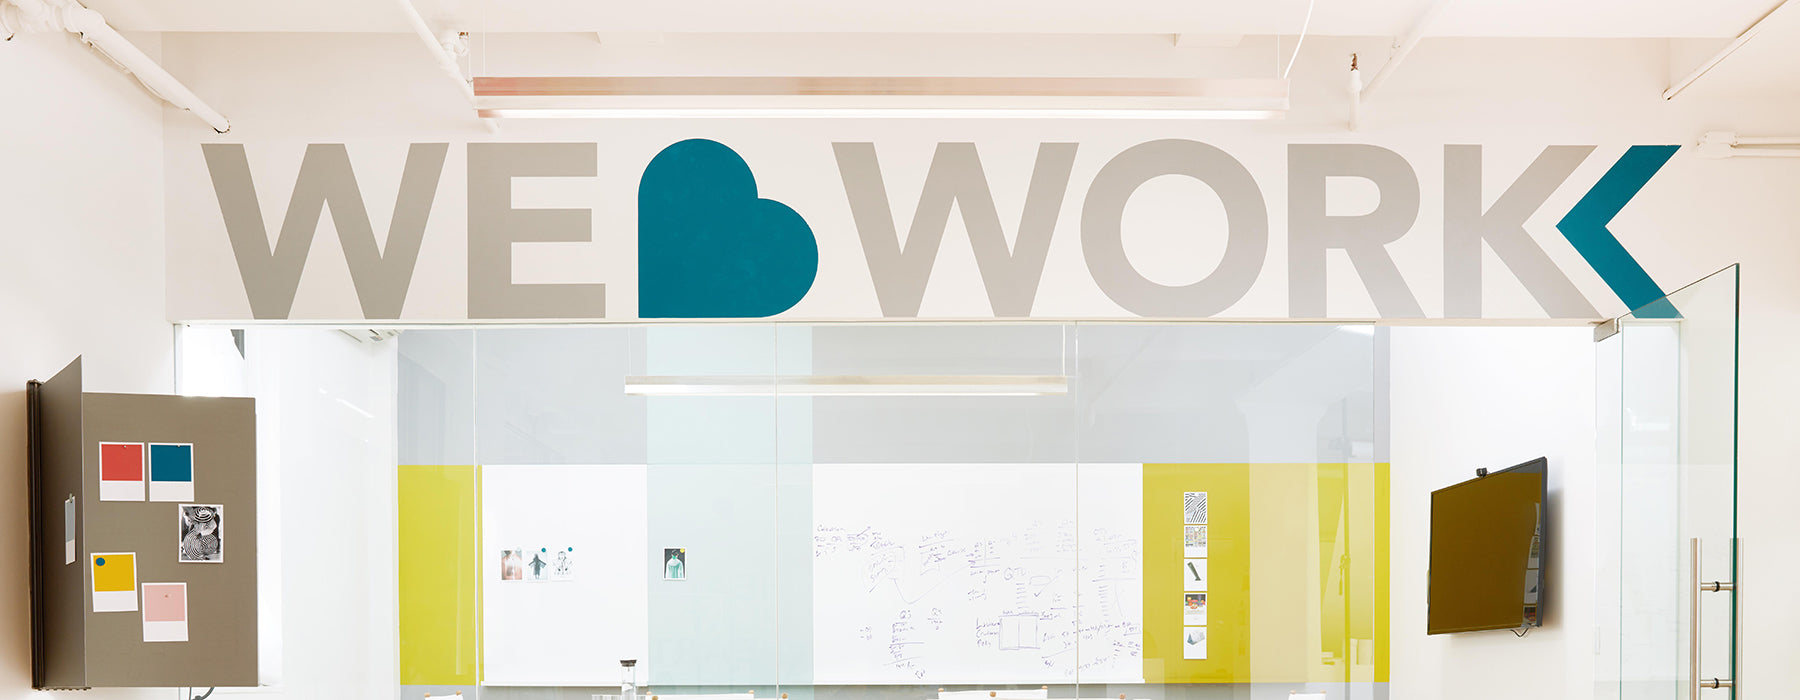 Heartwork showroom interior showing "We Love Work" quote